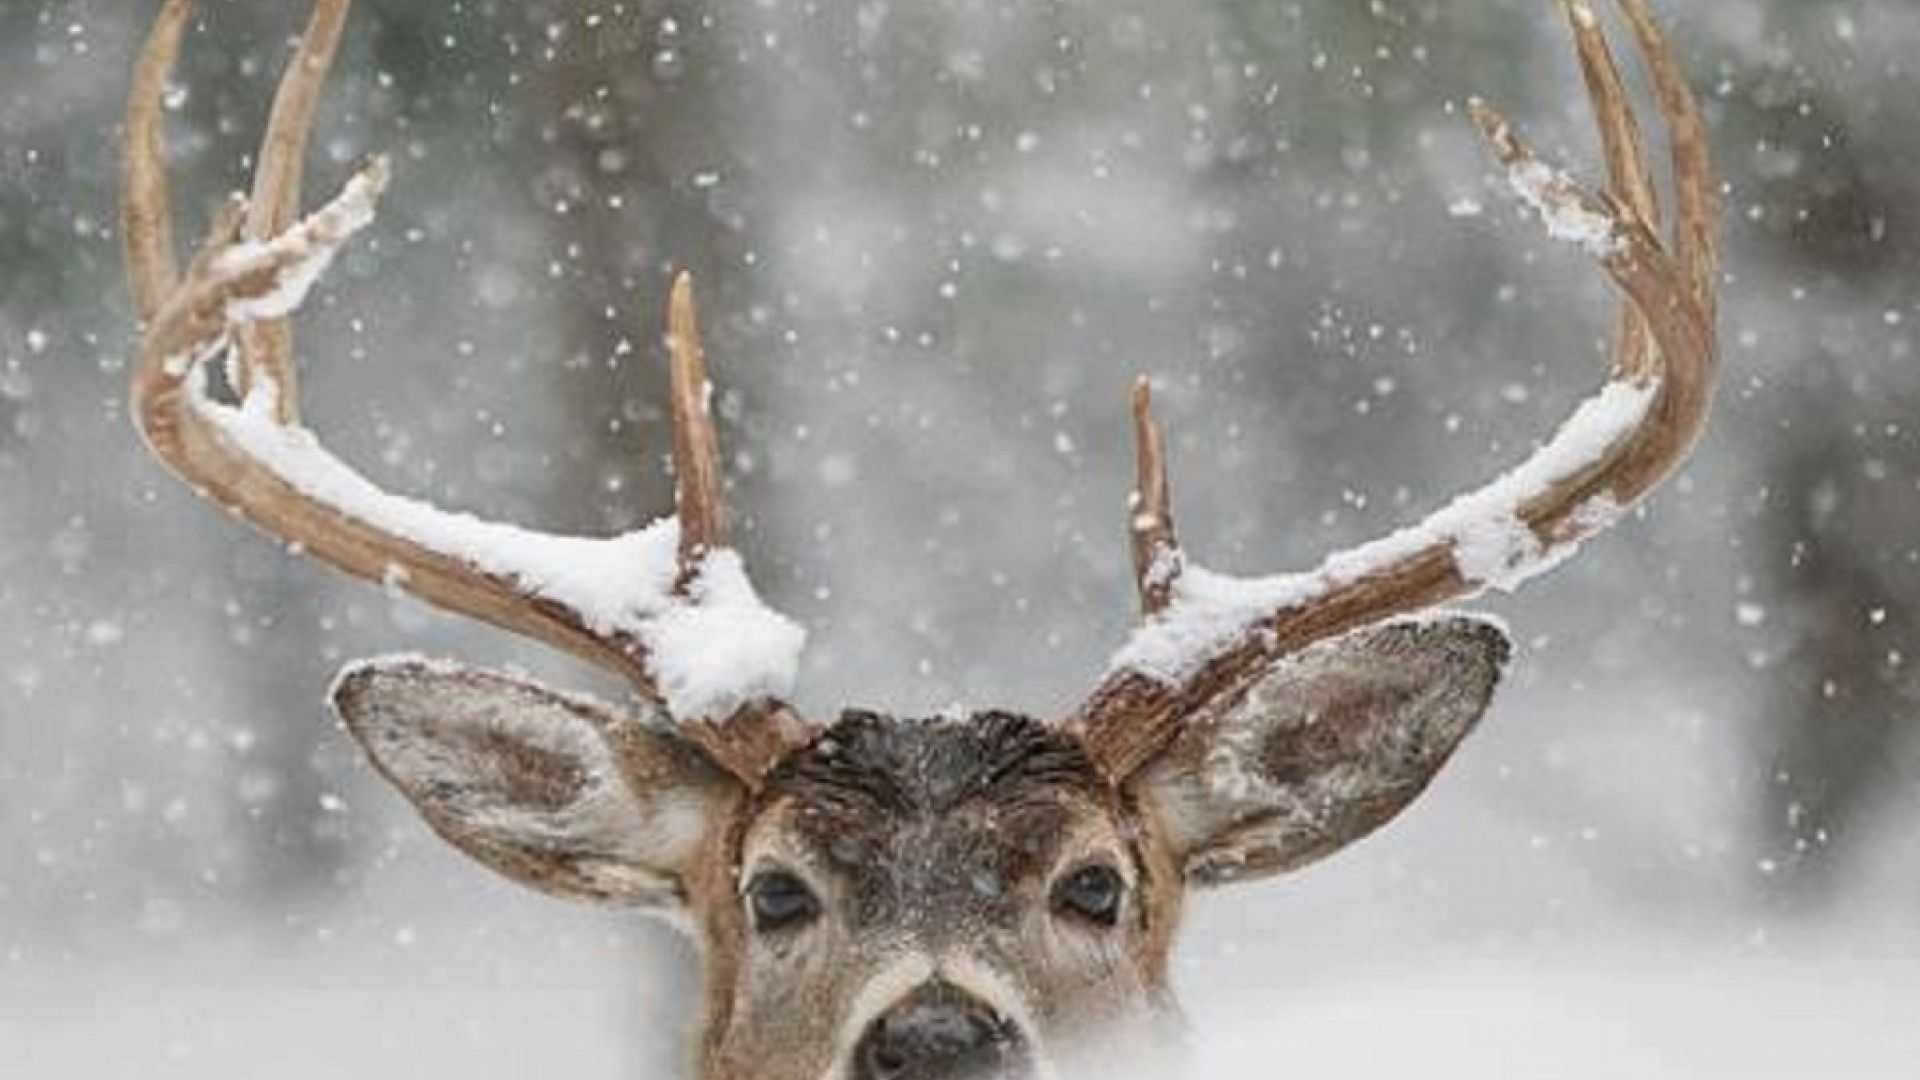 whitetail deer in snow wallpaper